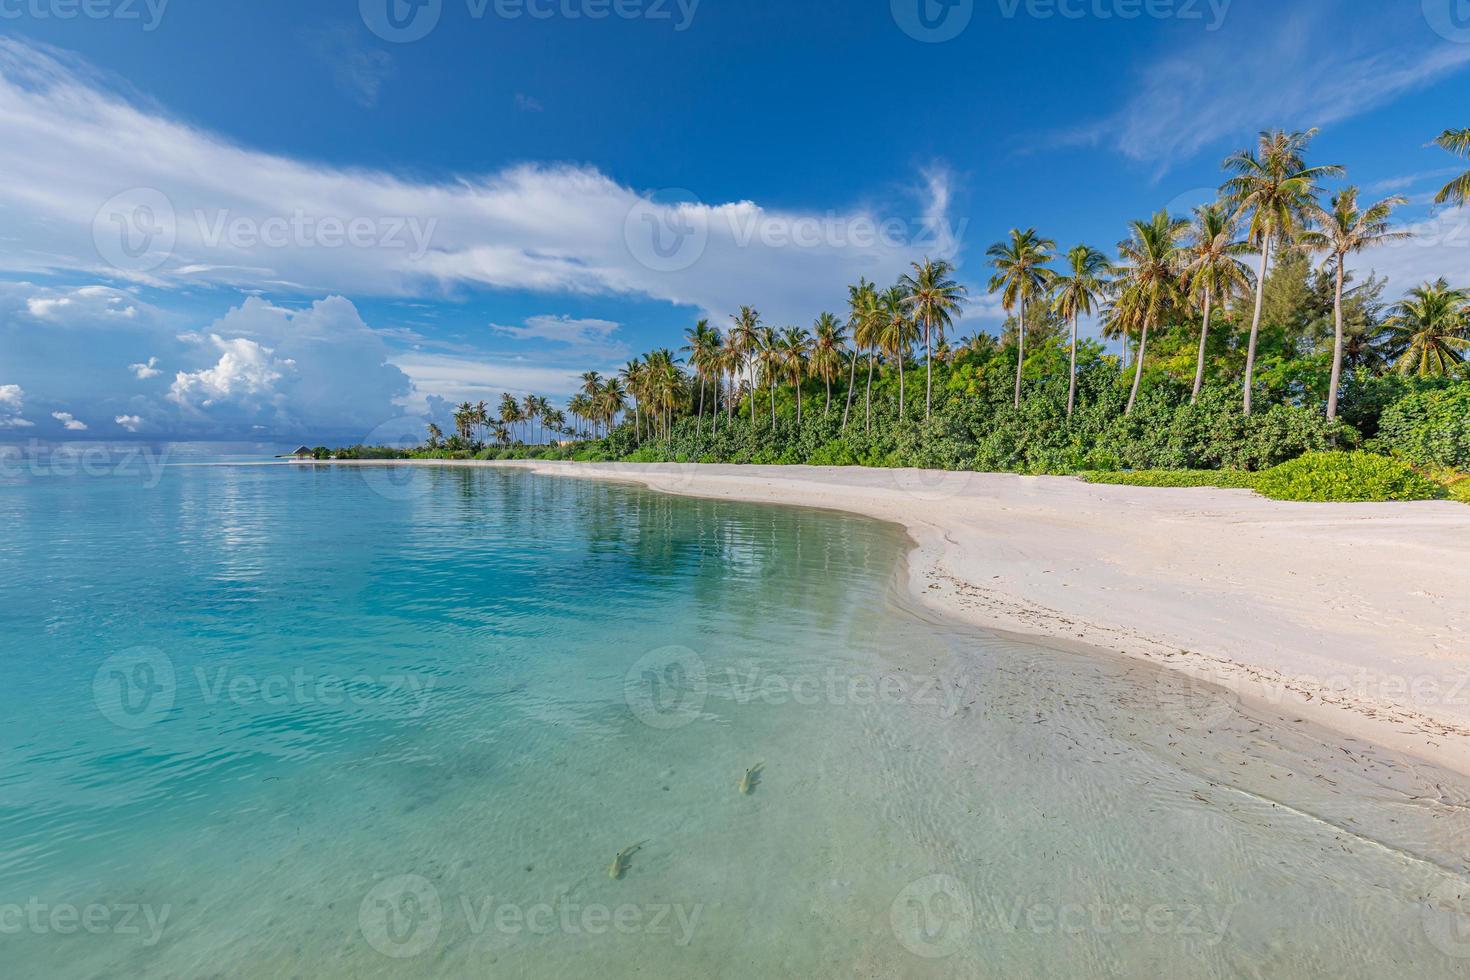 sommar resa bakgrund. exotisk tropisk strand ö, paradis kust. handflatan träd vit sand, Fantastisk himmel hav lagun. fantastisk skön natur panorama, solig dag idyllisk inspirera semester foto